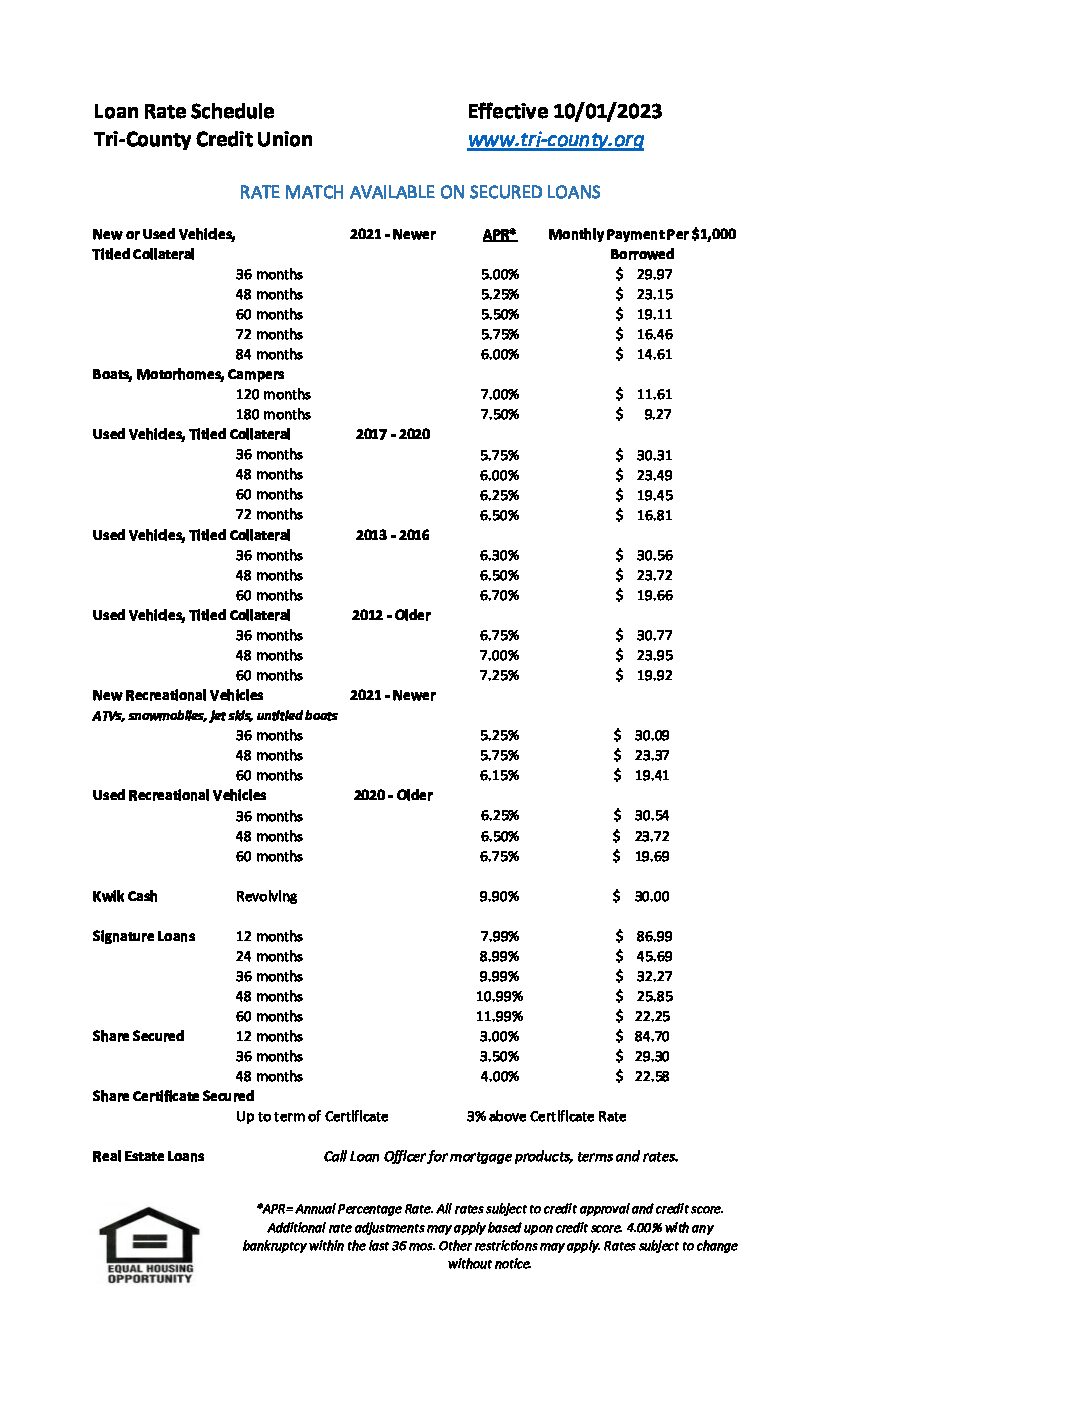 Loan Rate Schedule Effective 01/26/2021